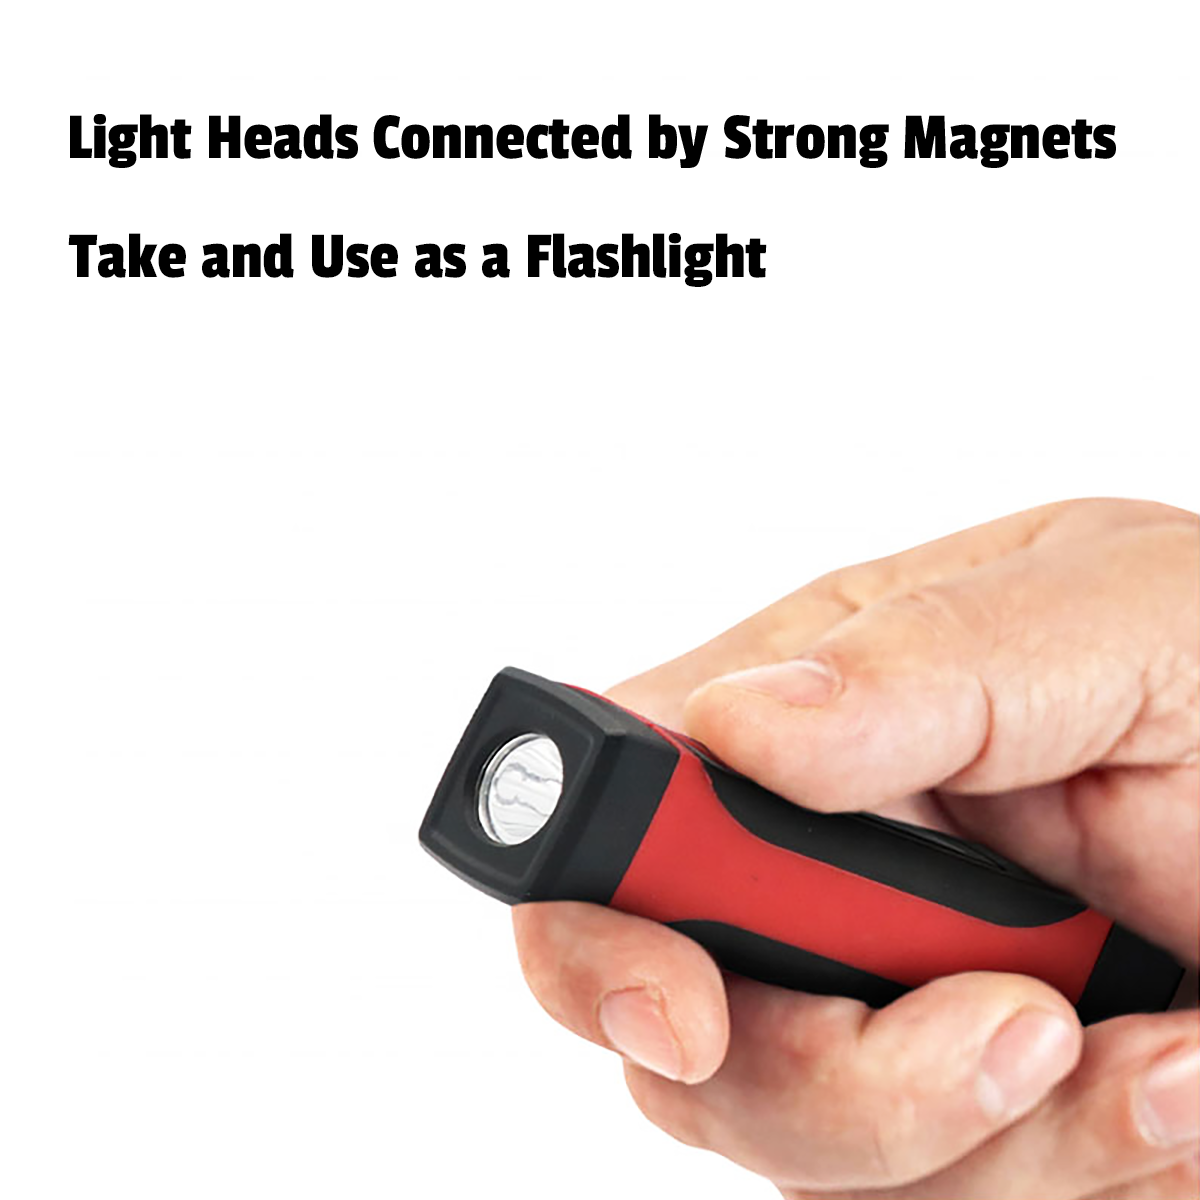 Technician's Neck Light Flashlight Usage